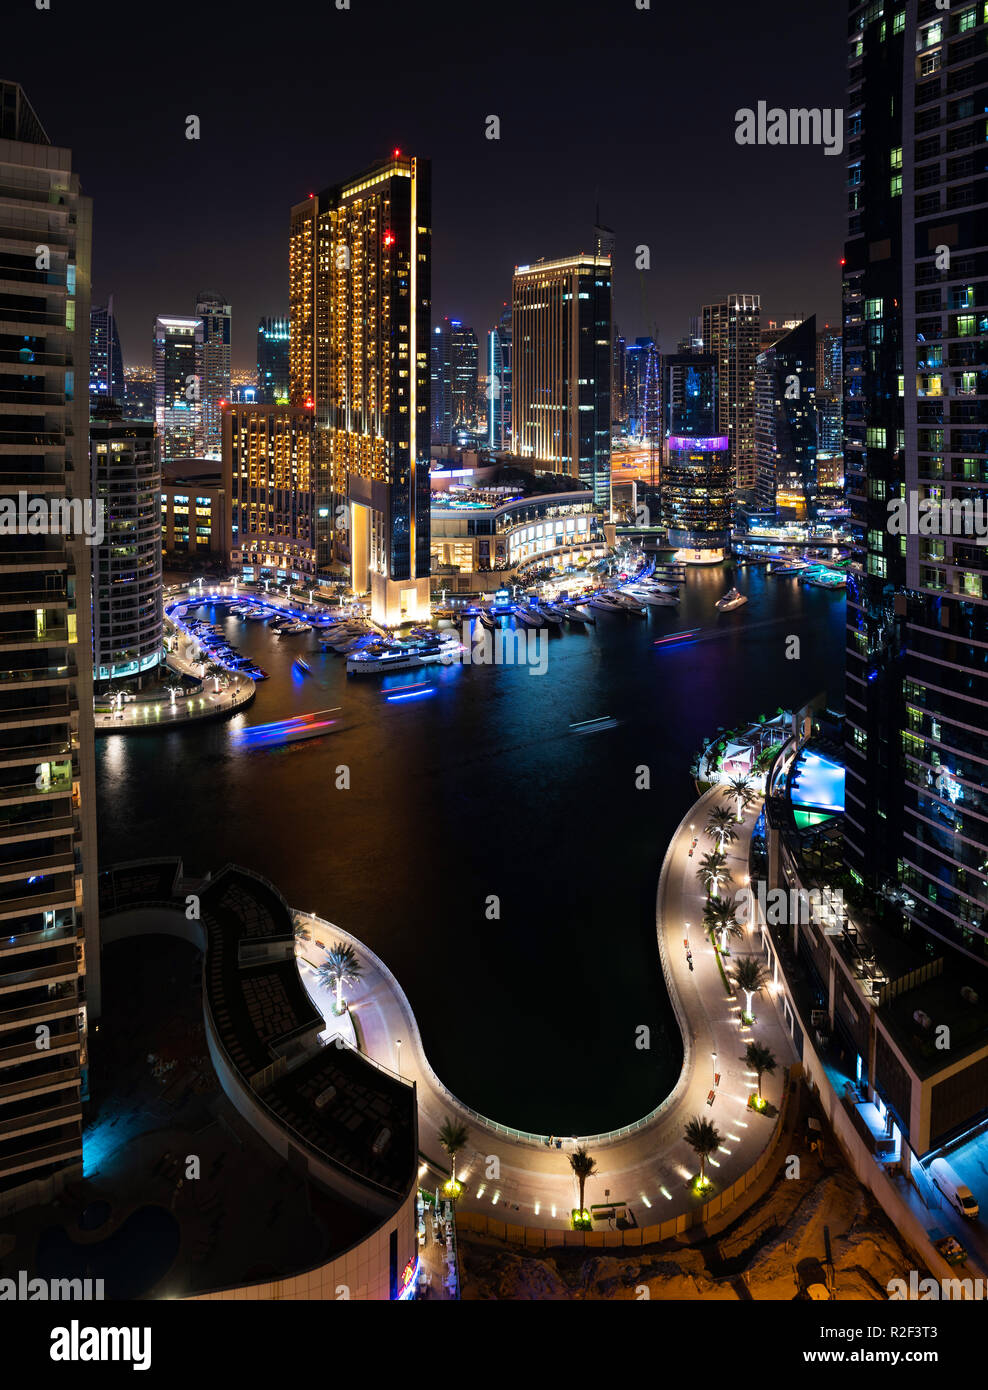 Dubai, Emiratos Árabes Unidos - Noviembre 16, 2018: Dubai Marina vista nocturna de moderna arquitectura y ambiente de lujo del famoso destino turístico Foto de stock